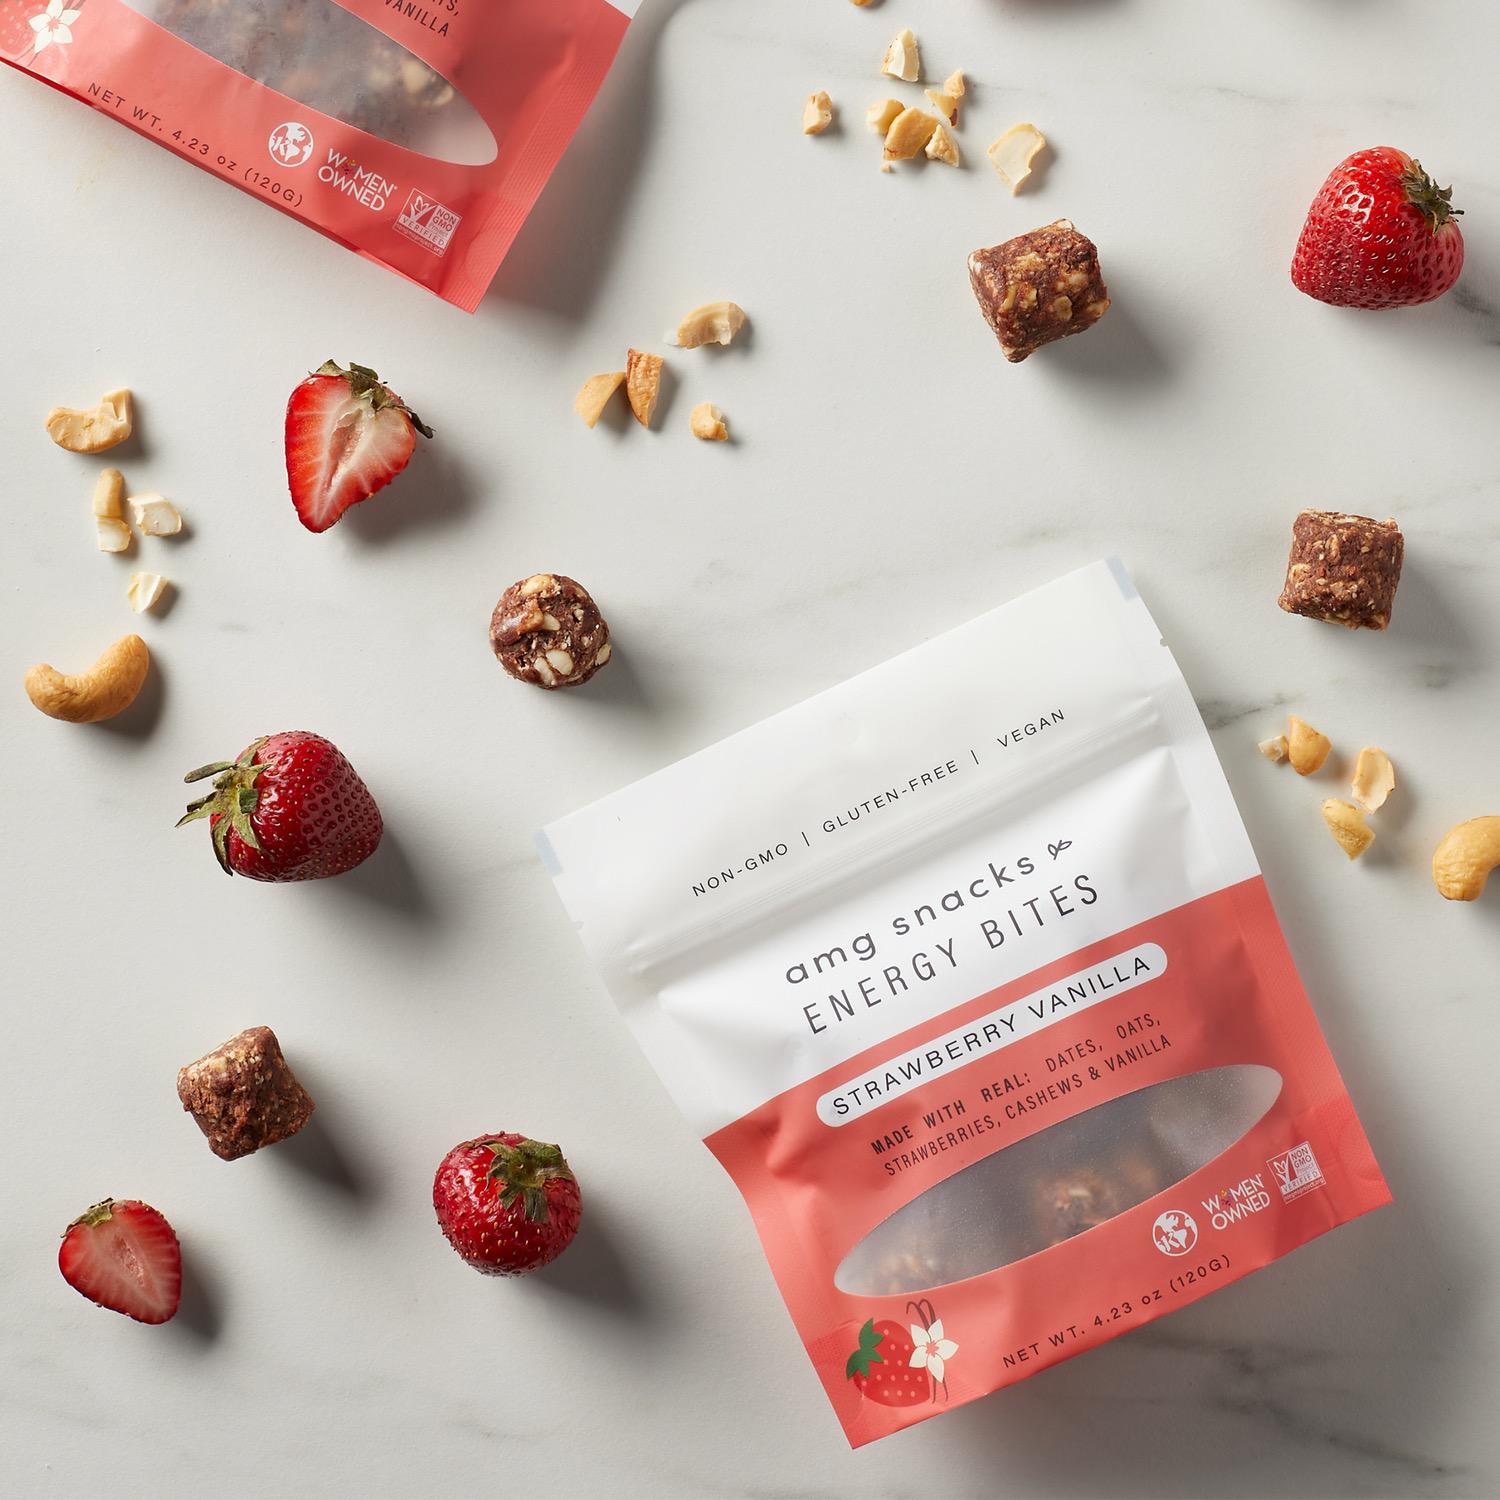 Bag of AMG Snacks Strawberry Vanilla Energy Bites: strawberries and cashews scattered around.